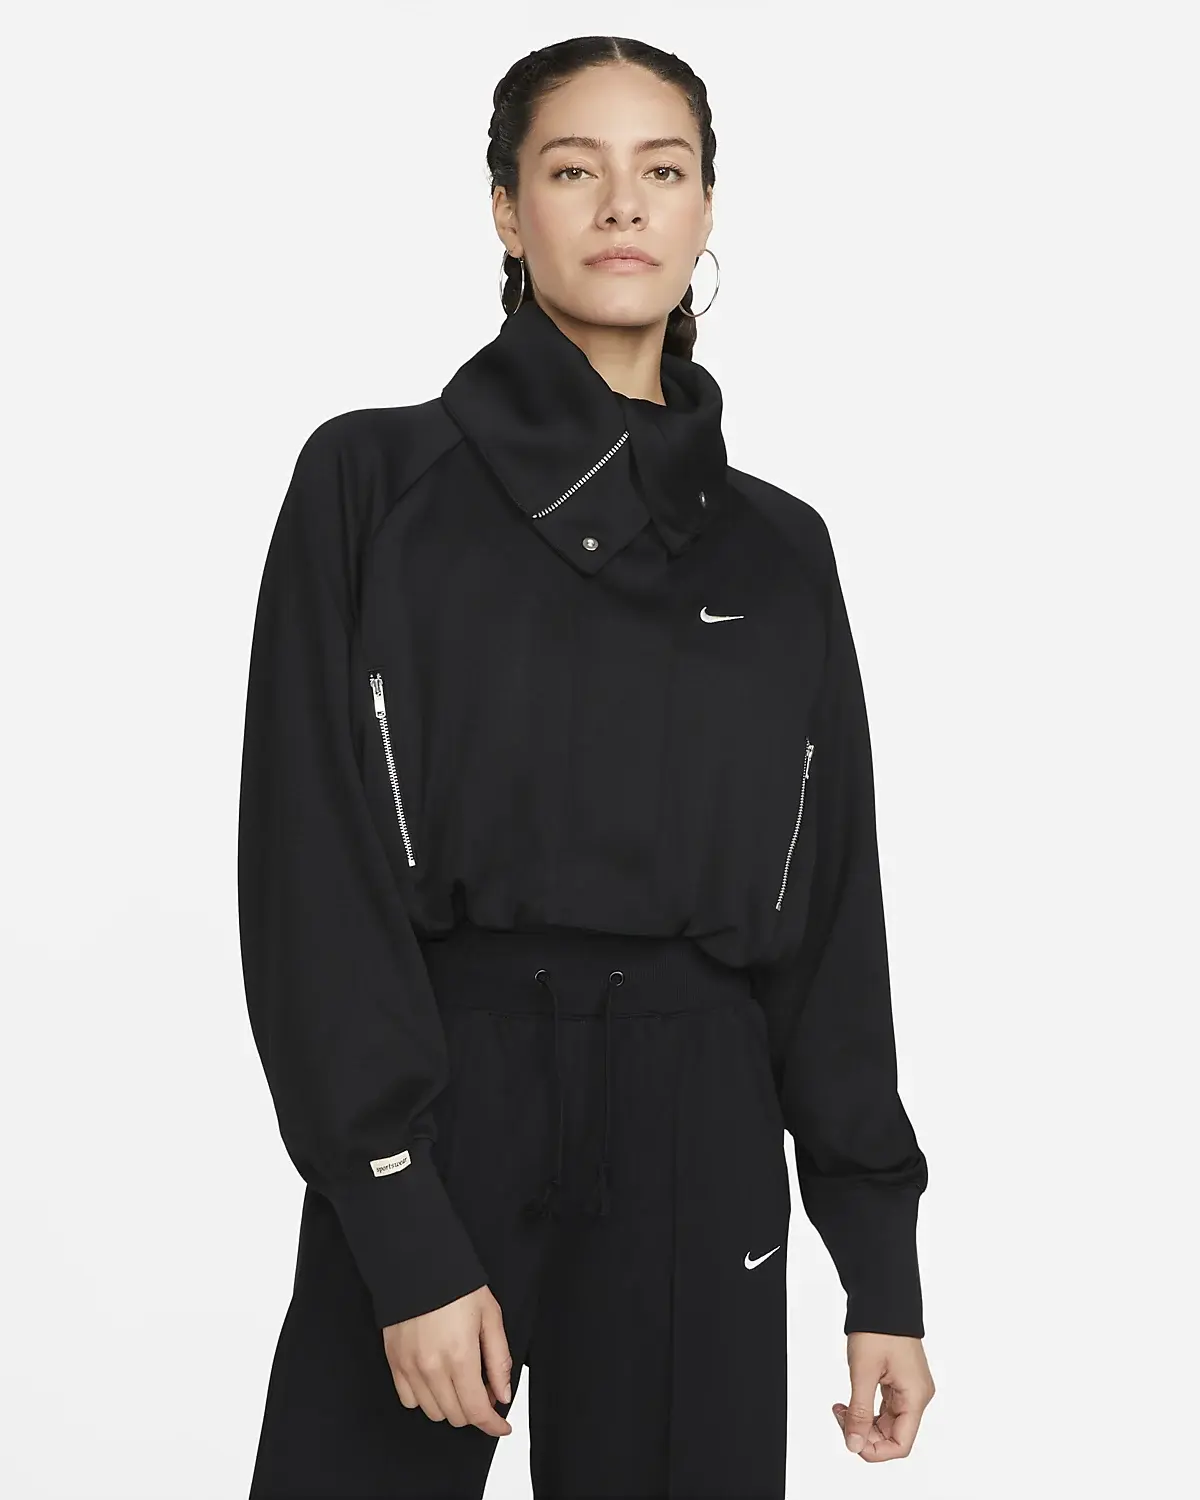 Nike Sportswear Collection. 1